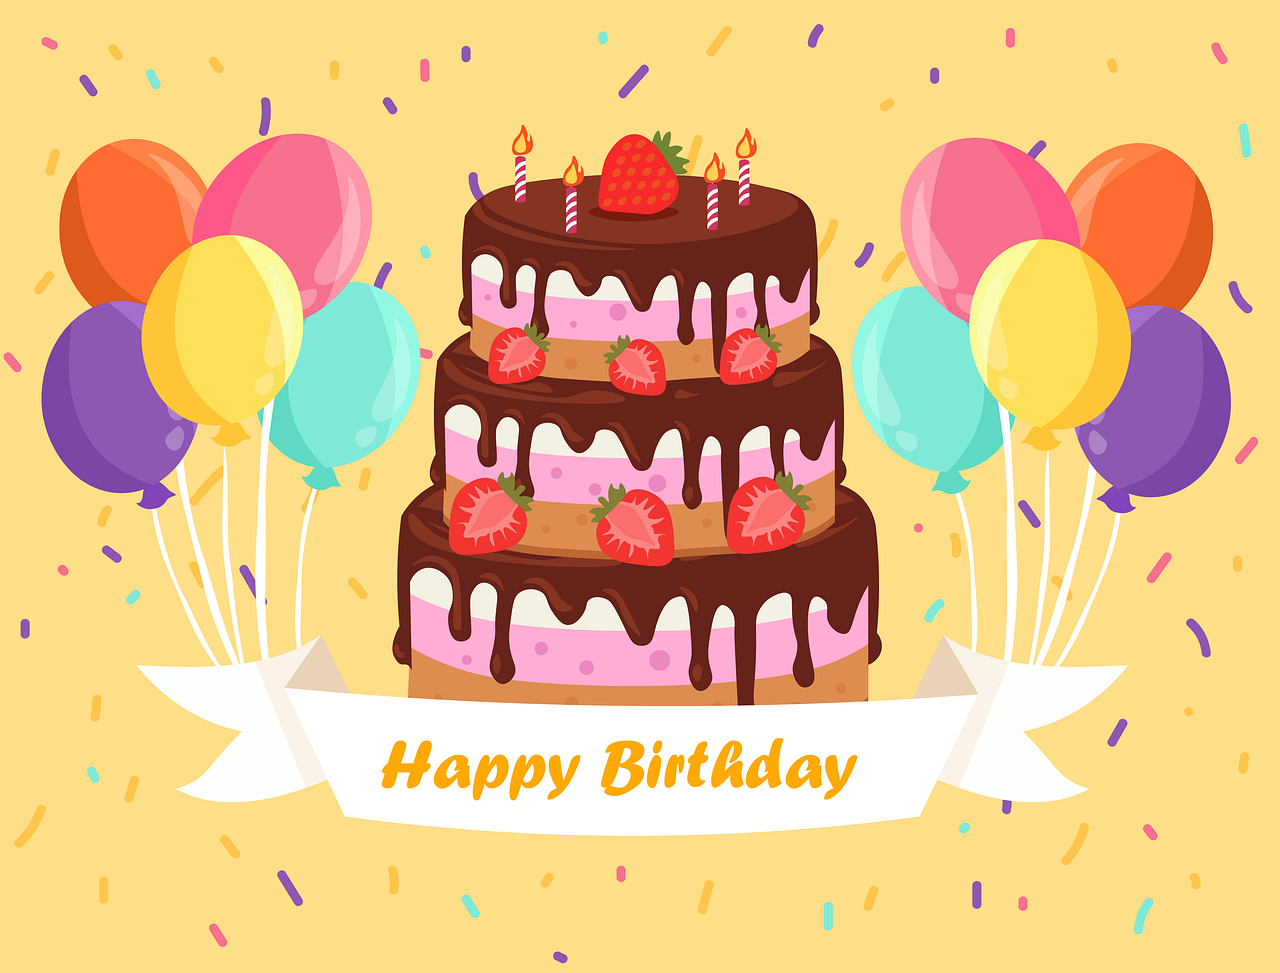 cake, balloons, candles-5633461.jpg